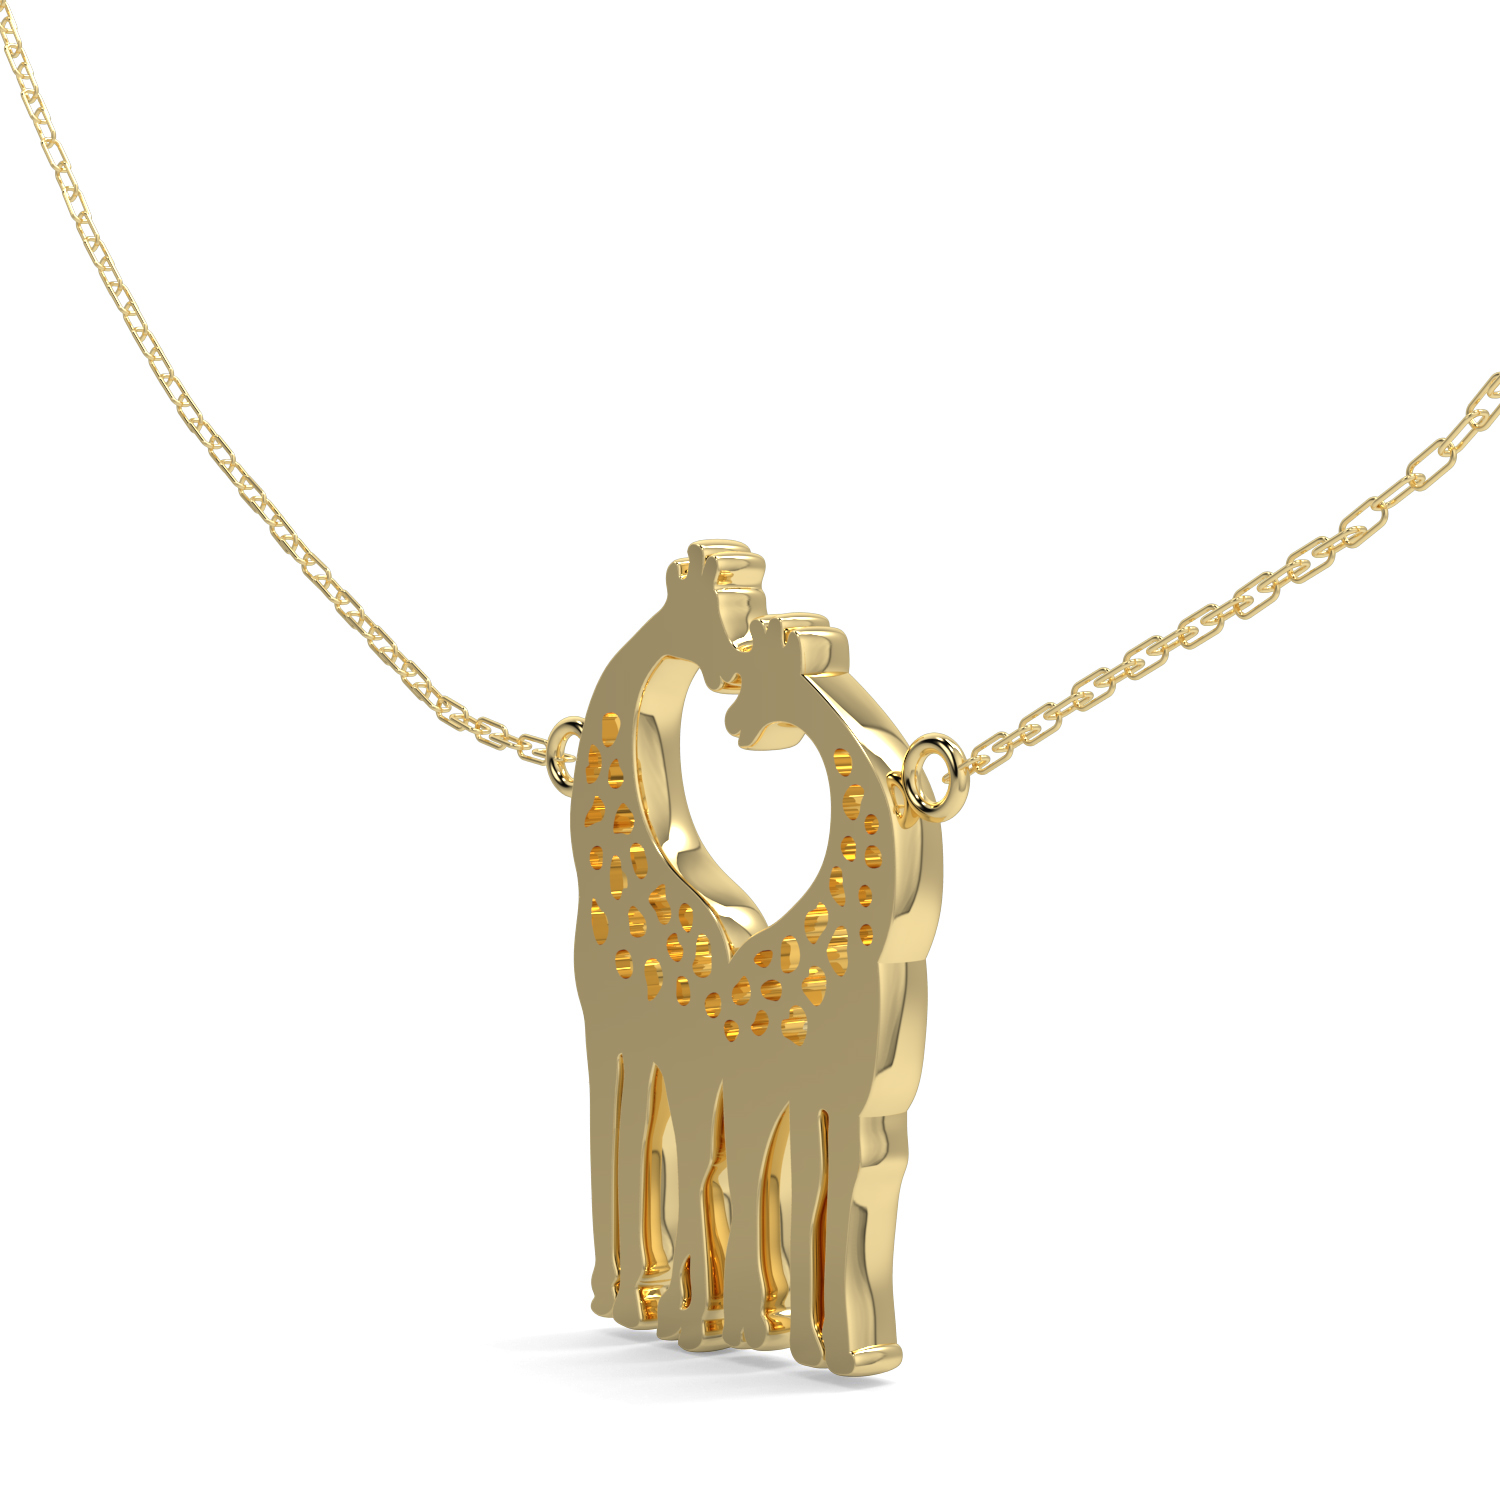 Gold Chain, Giraffe Chain, Light weight Chain